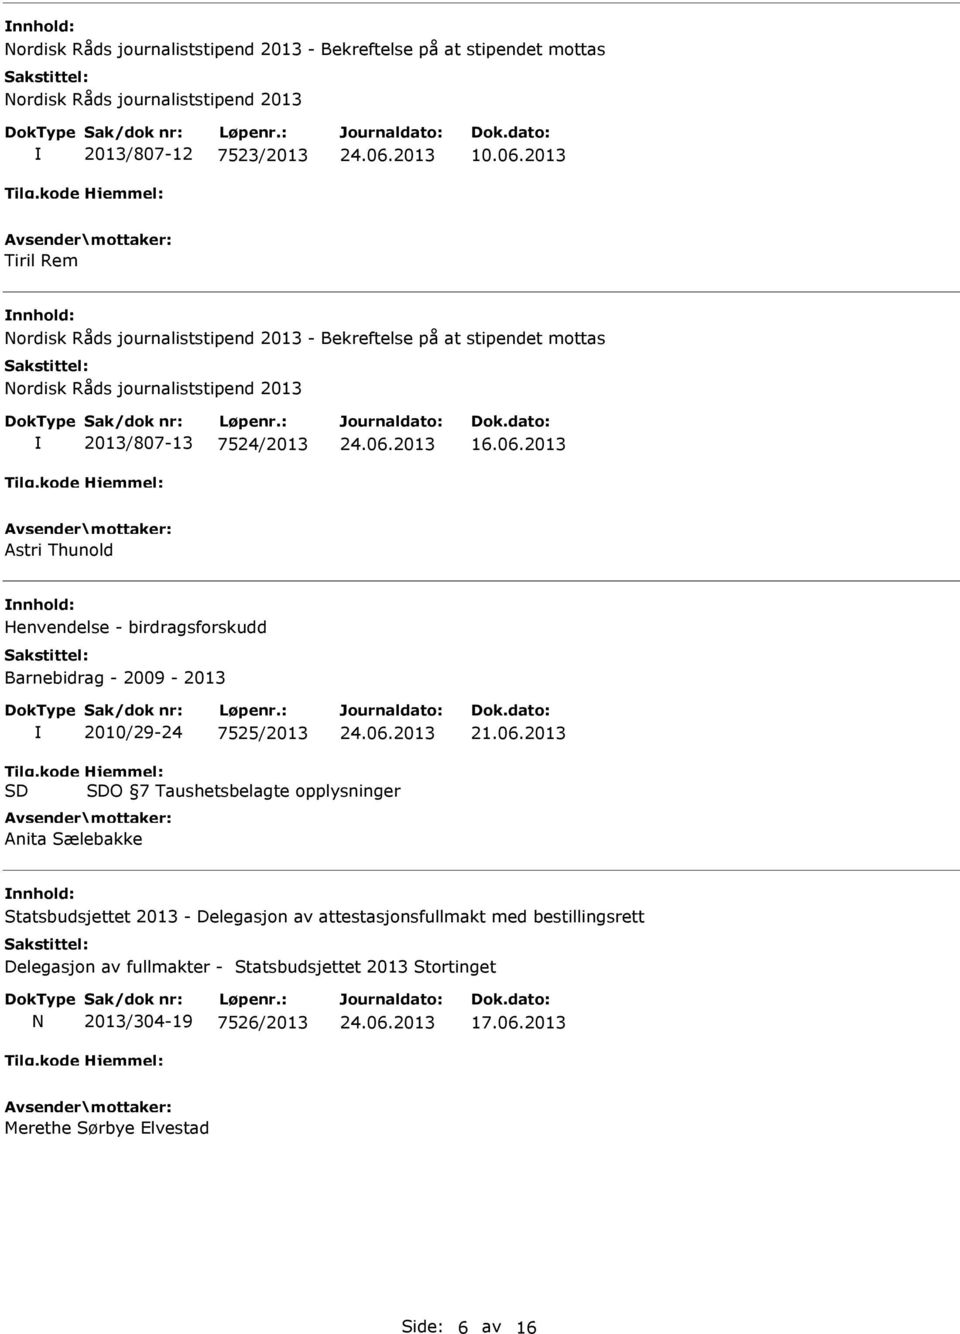 2013 Astri Thunold Henvendelse - birdragsforskudd Barnebidrag - 2009-2013 2010/29-24 7525/2013 21.06.